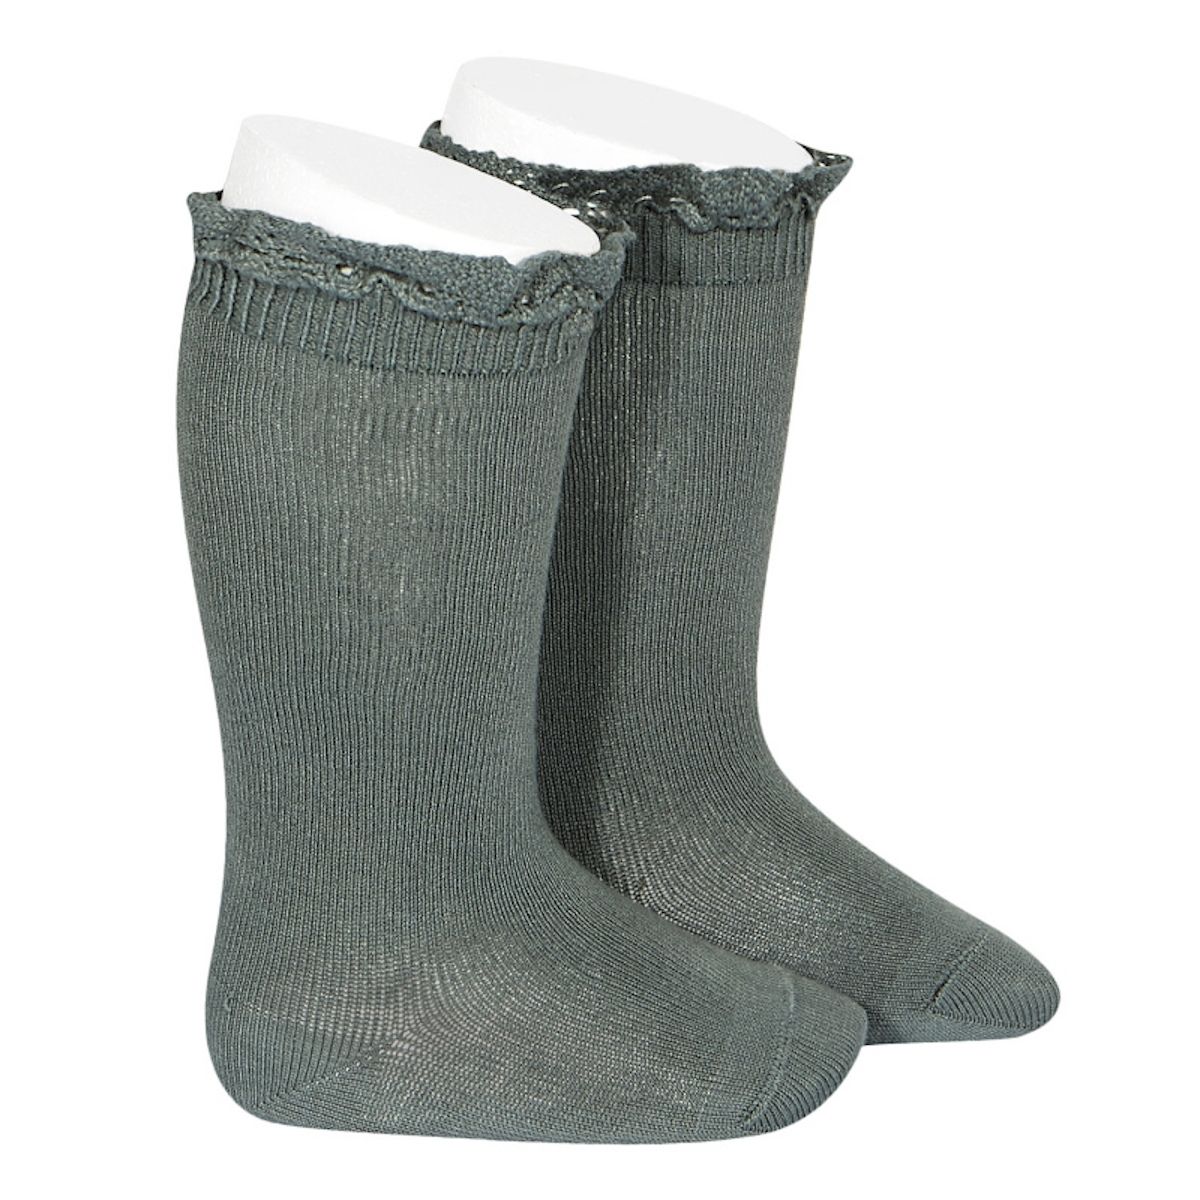 Condor Knee Socks With Lace lichen green 2.409/2_761 